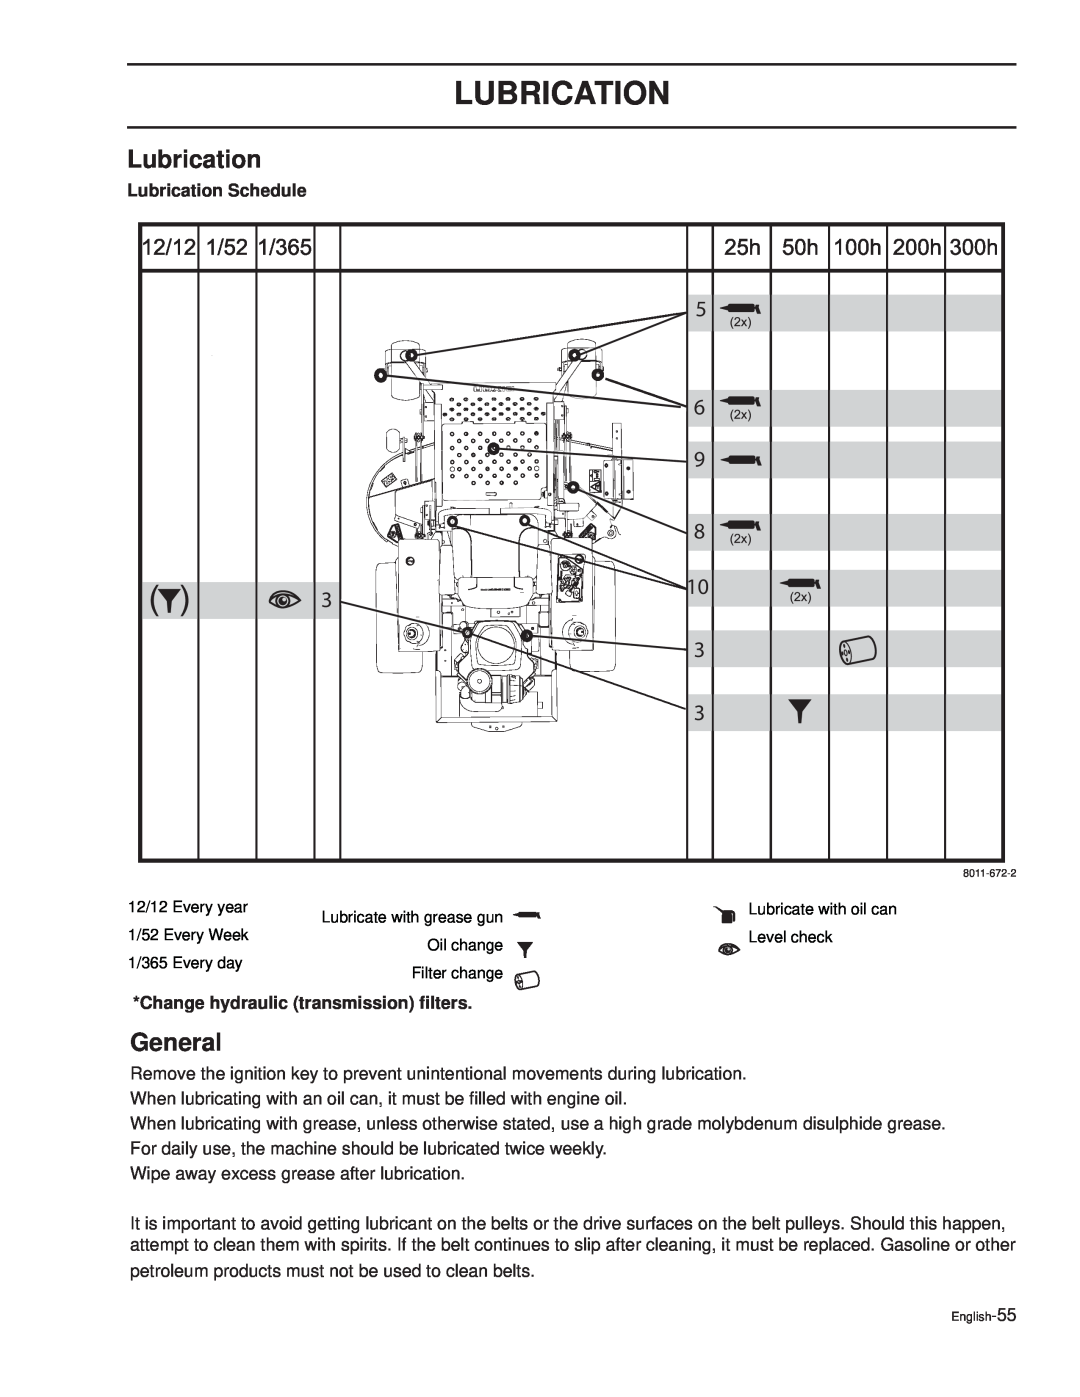 Dixon 30 KOH/968999591, 30 KOH/968999592 manual General, Lubrication Schedule, Change hydraulic transmission ﬁlters 